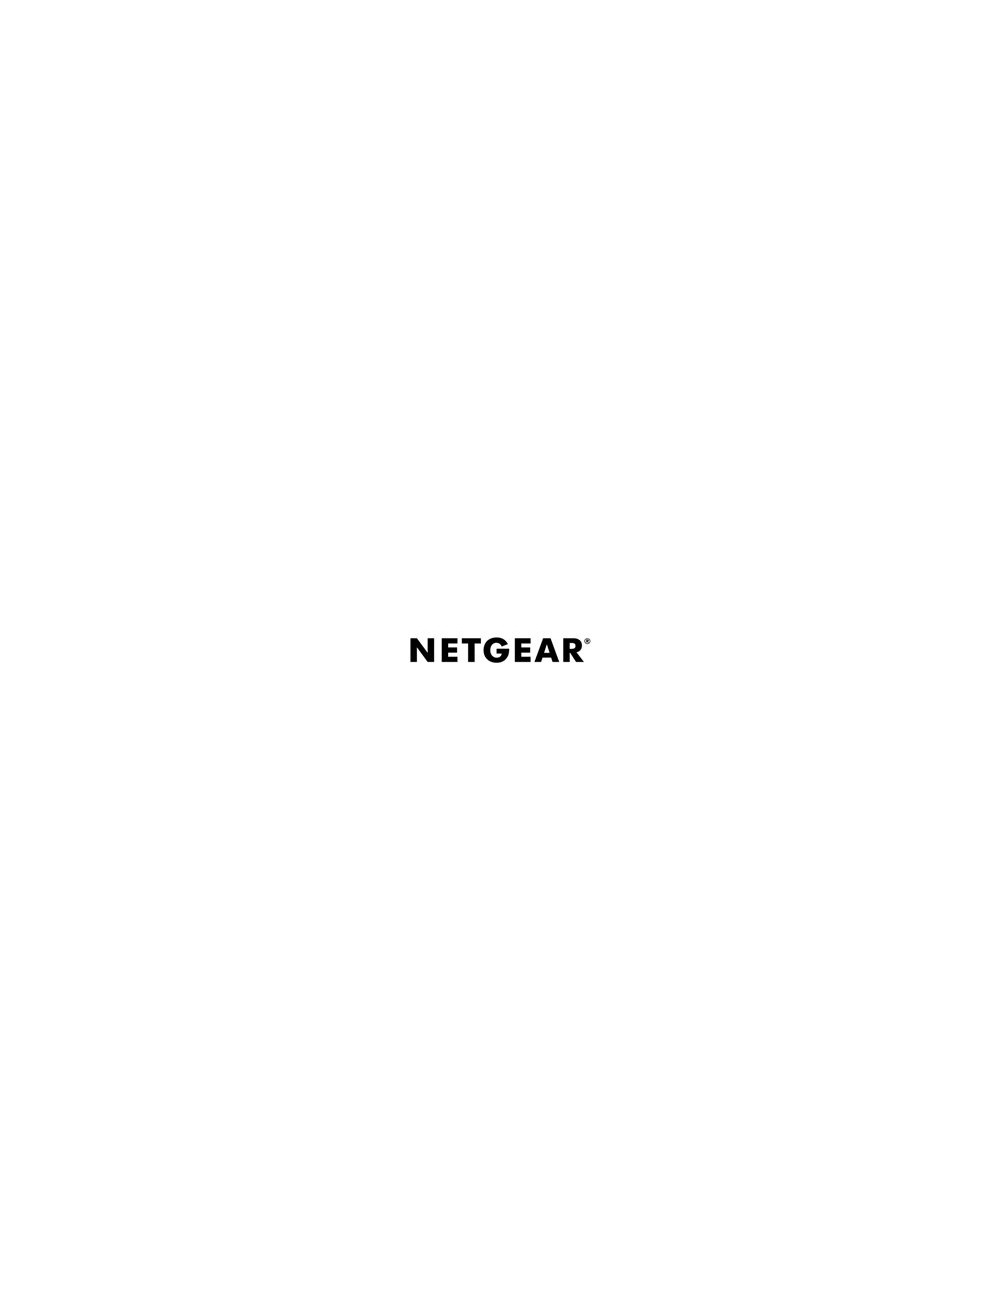 NETGEAR 52port POE+ Managed Pro Switch